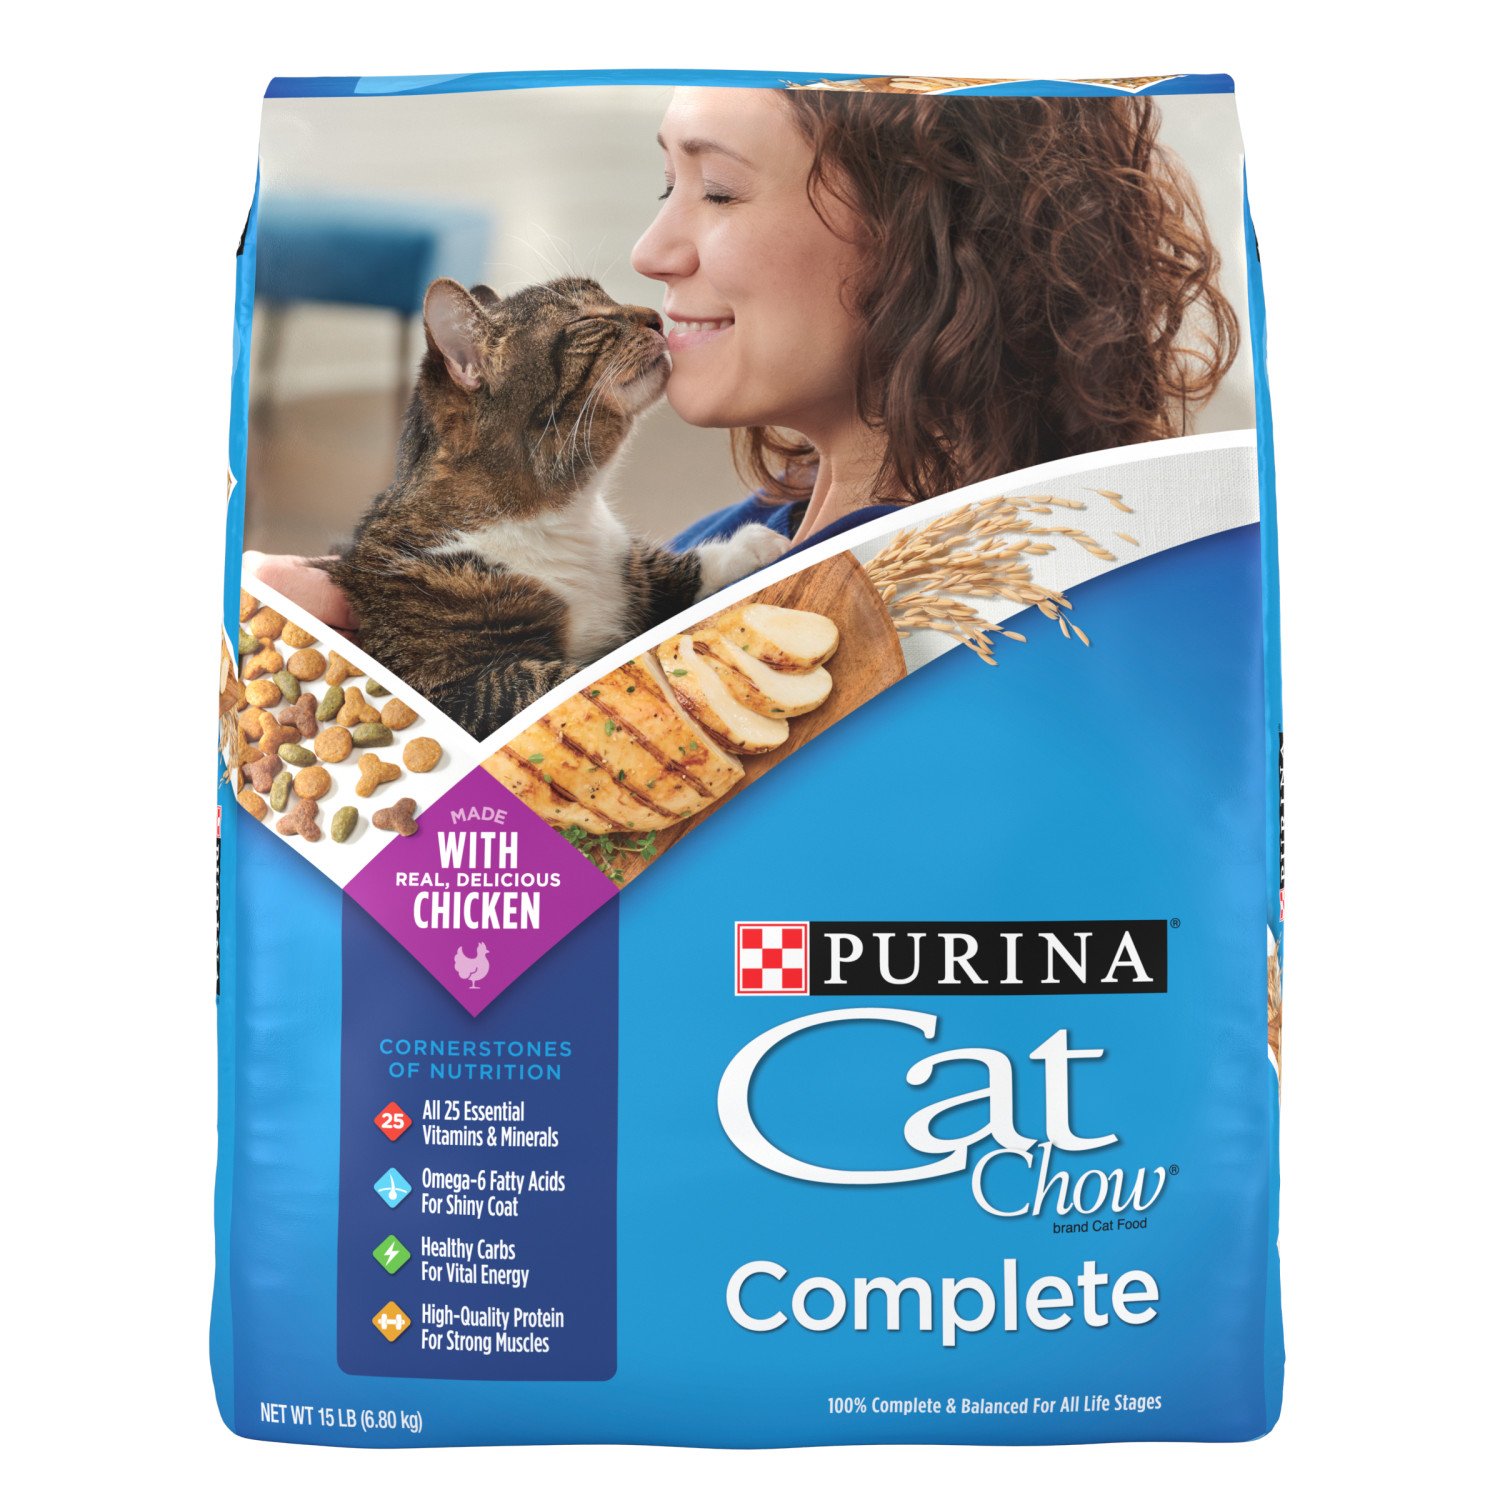 purina cat food